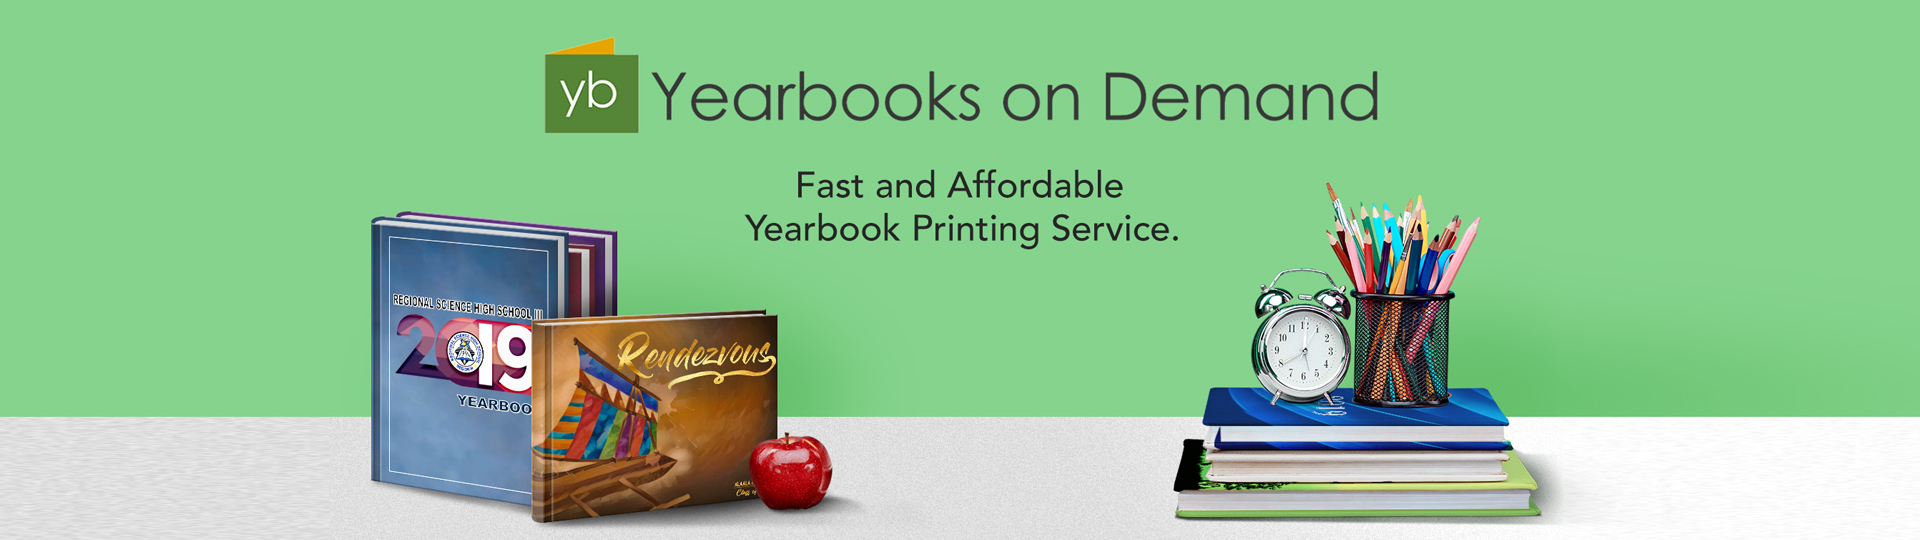 Yearbooks on Demand